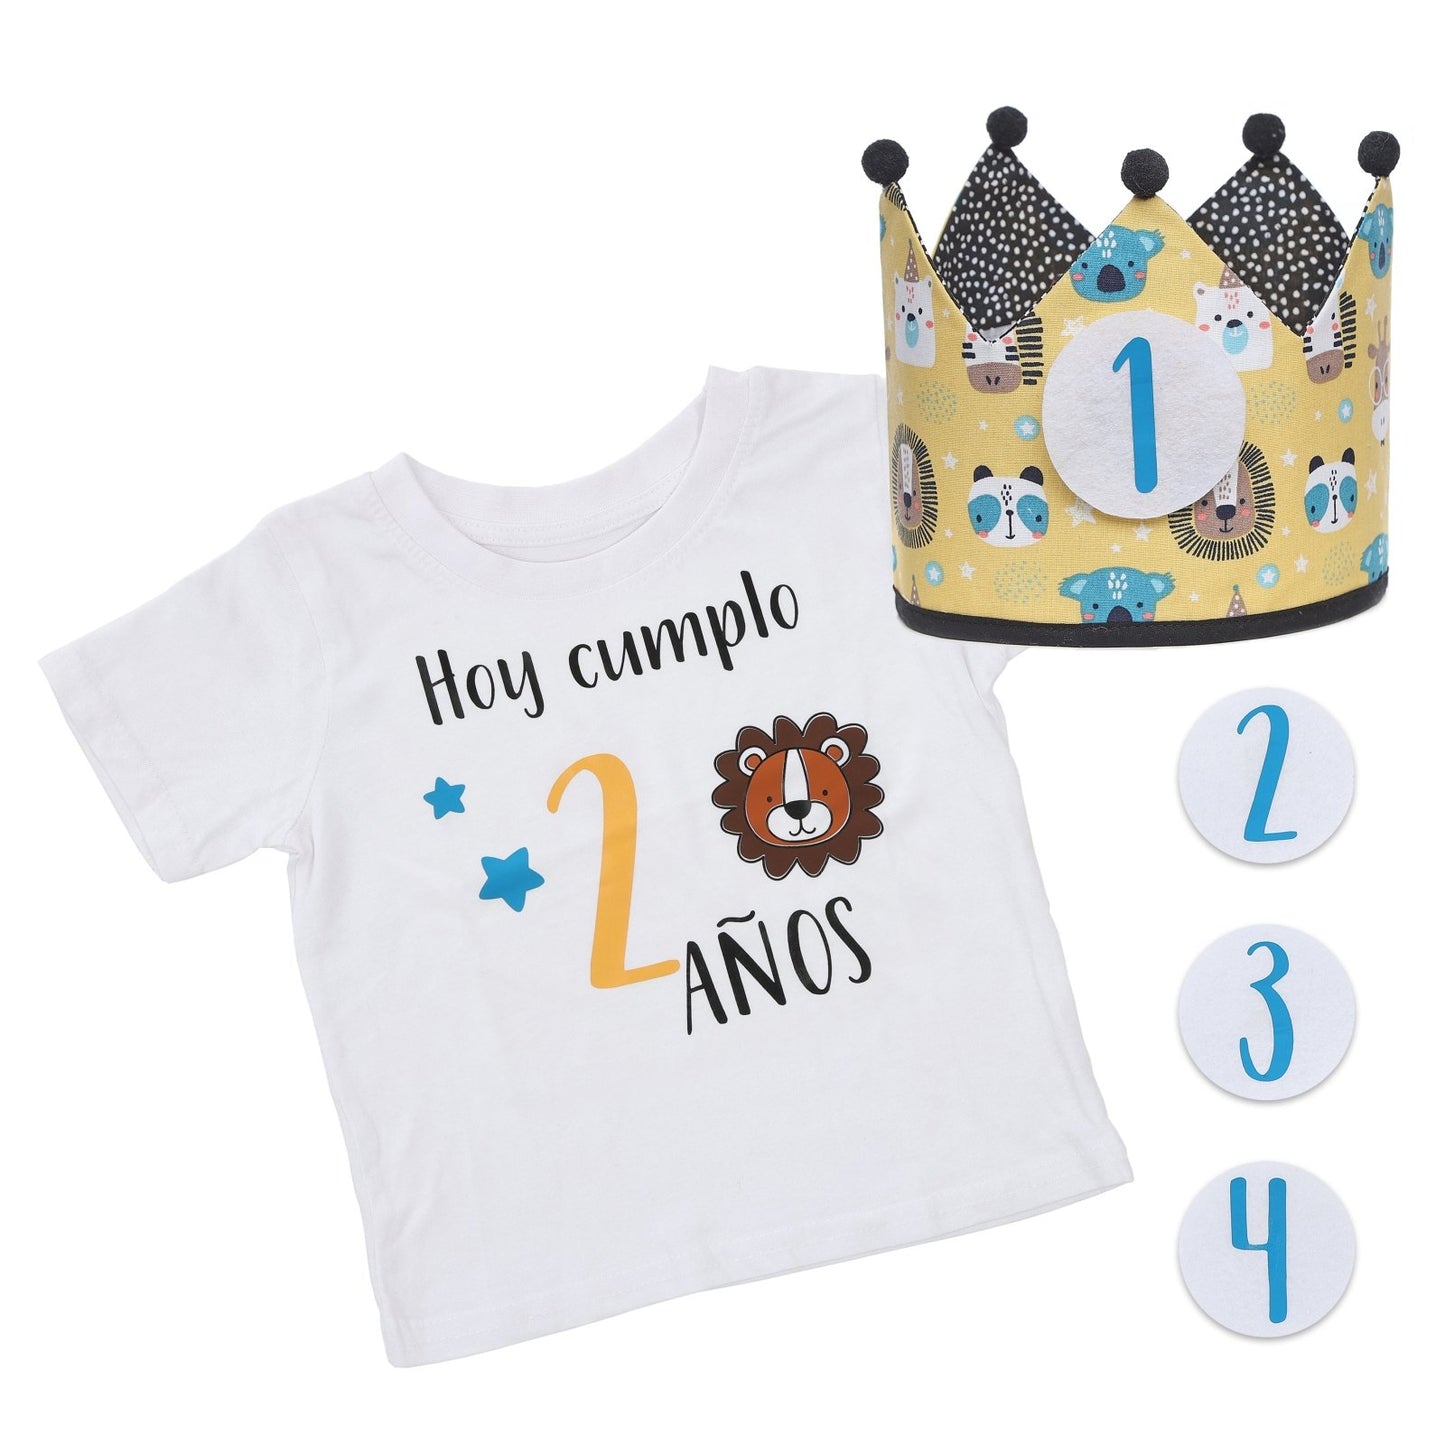 Pack de cumpleaños Corona + camiseta + tutú + varita a juego.